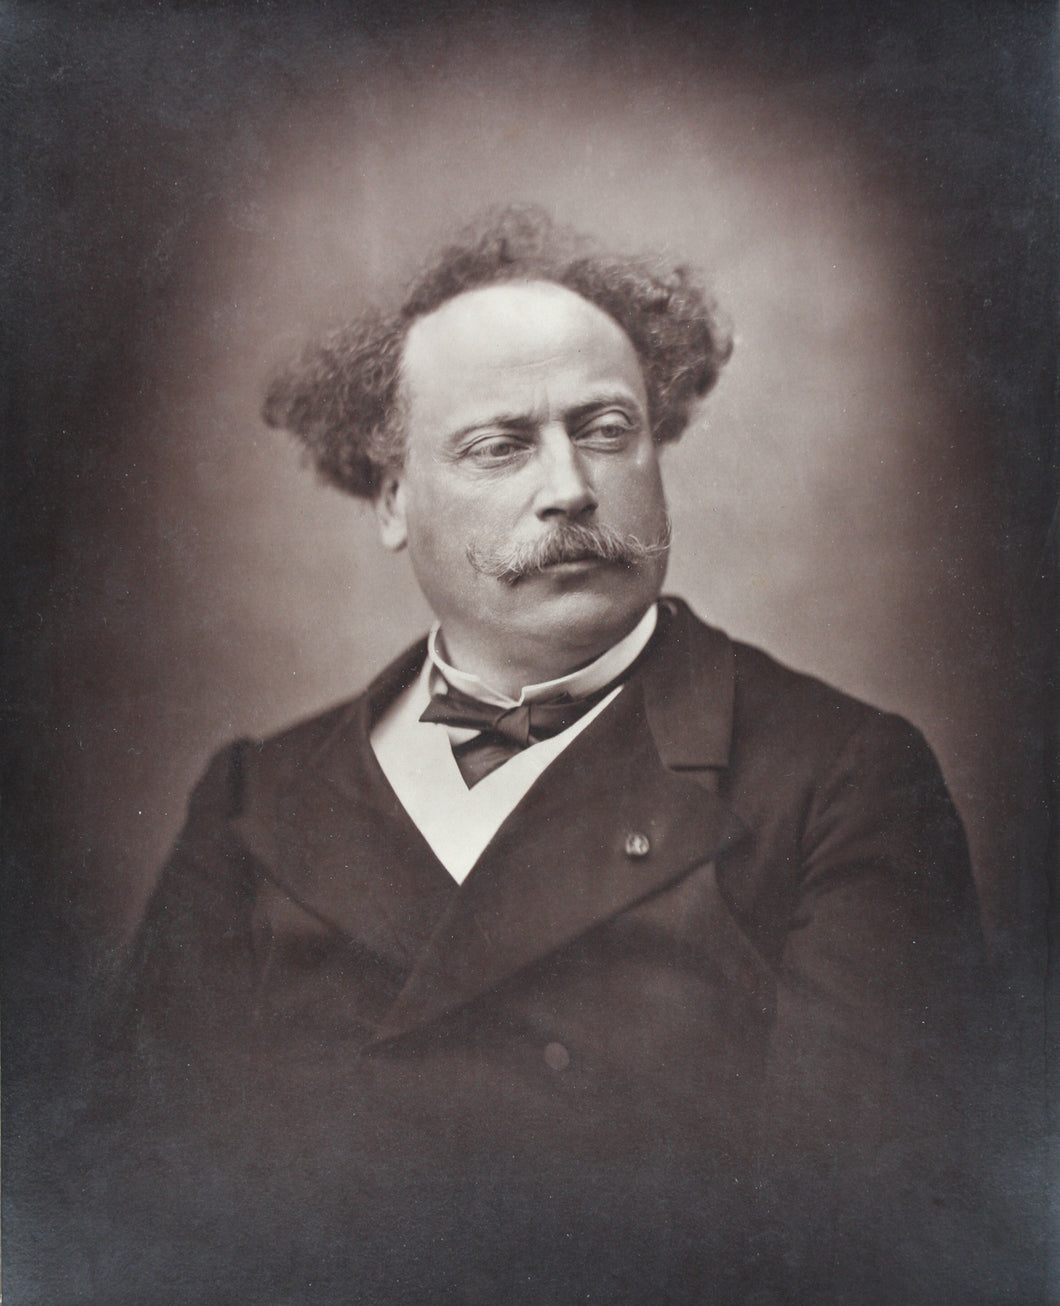 G. Fontaine. Photo portrait of Alexandre Dumas fils. Woodburytype. 1860s.